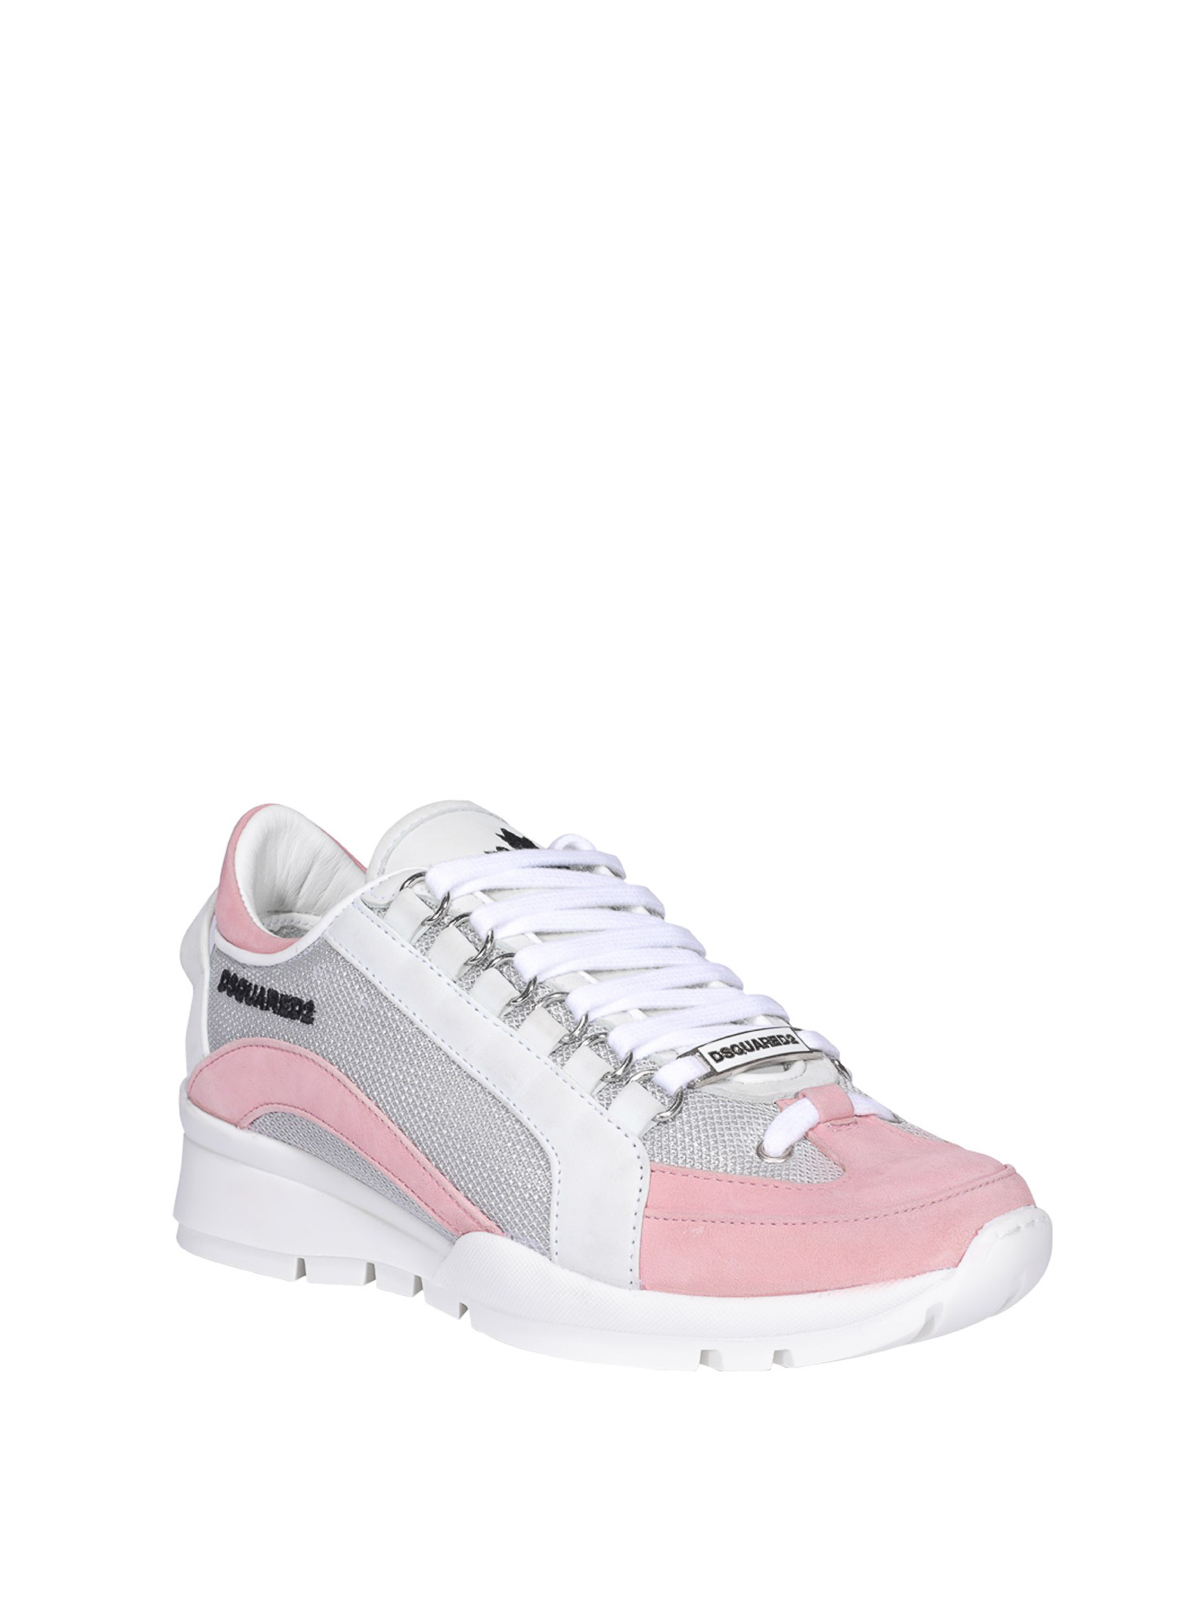 Gewond raken vergelijking Purper Trainers Dsquared2 - 551 white and pink sneakers - SNW050508102683M1824